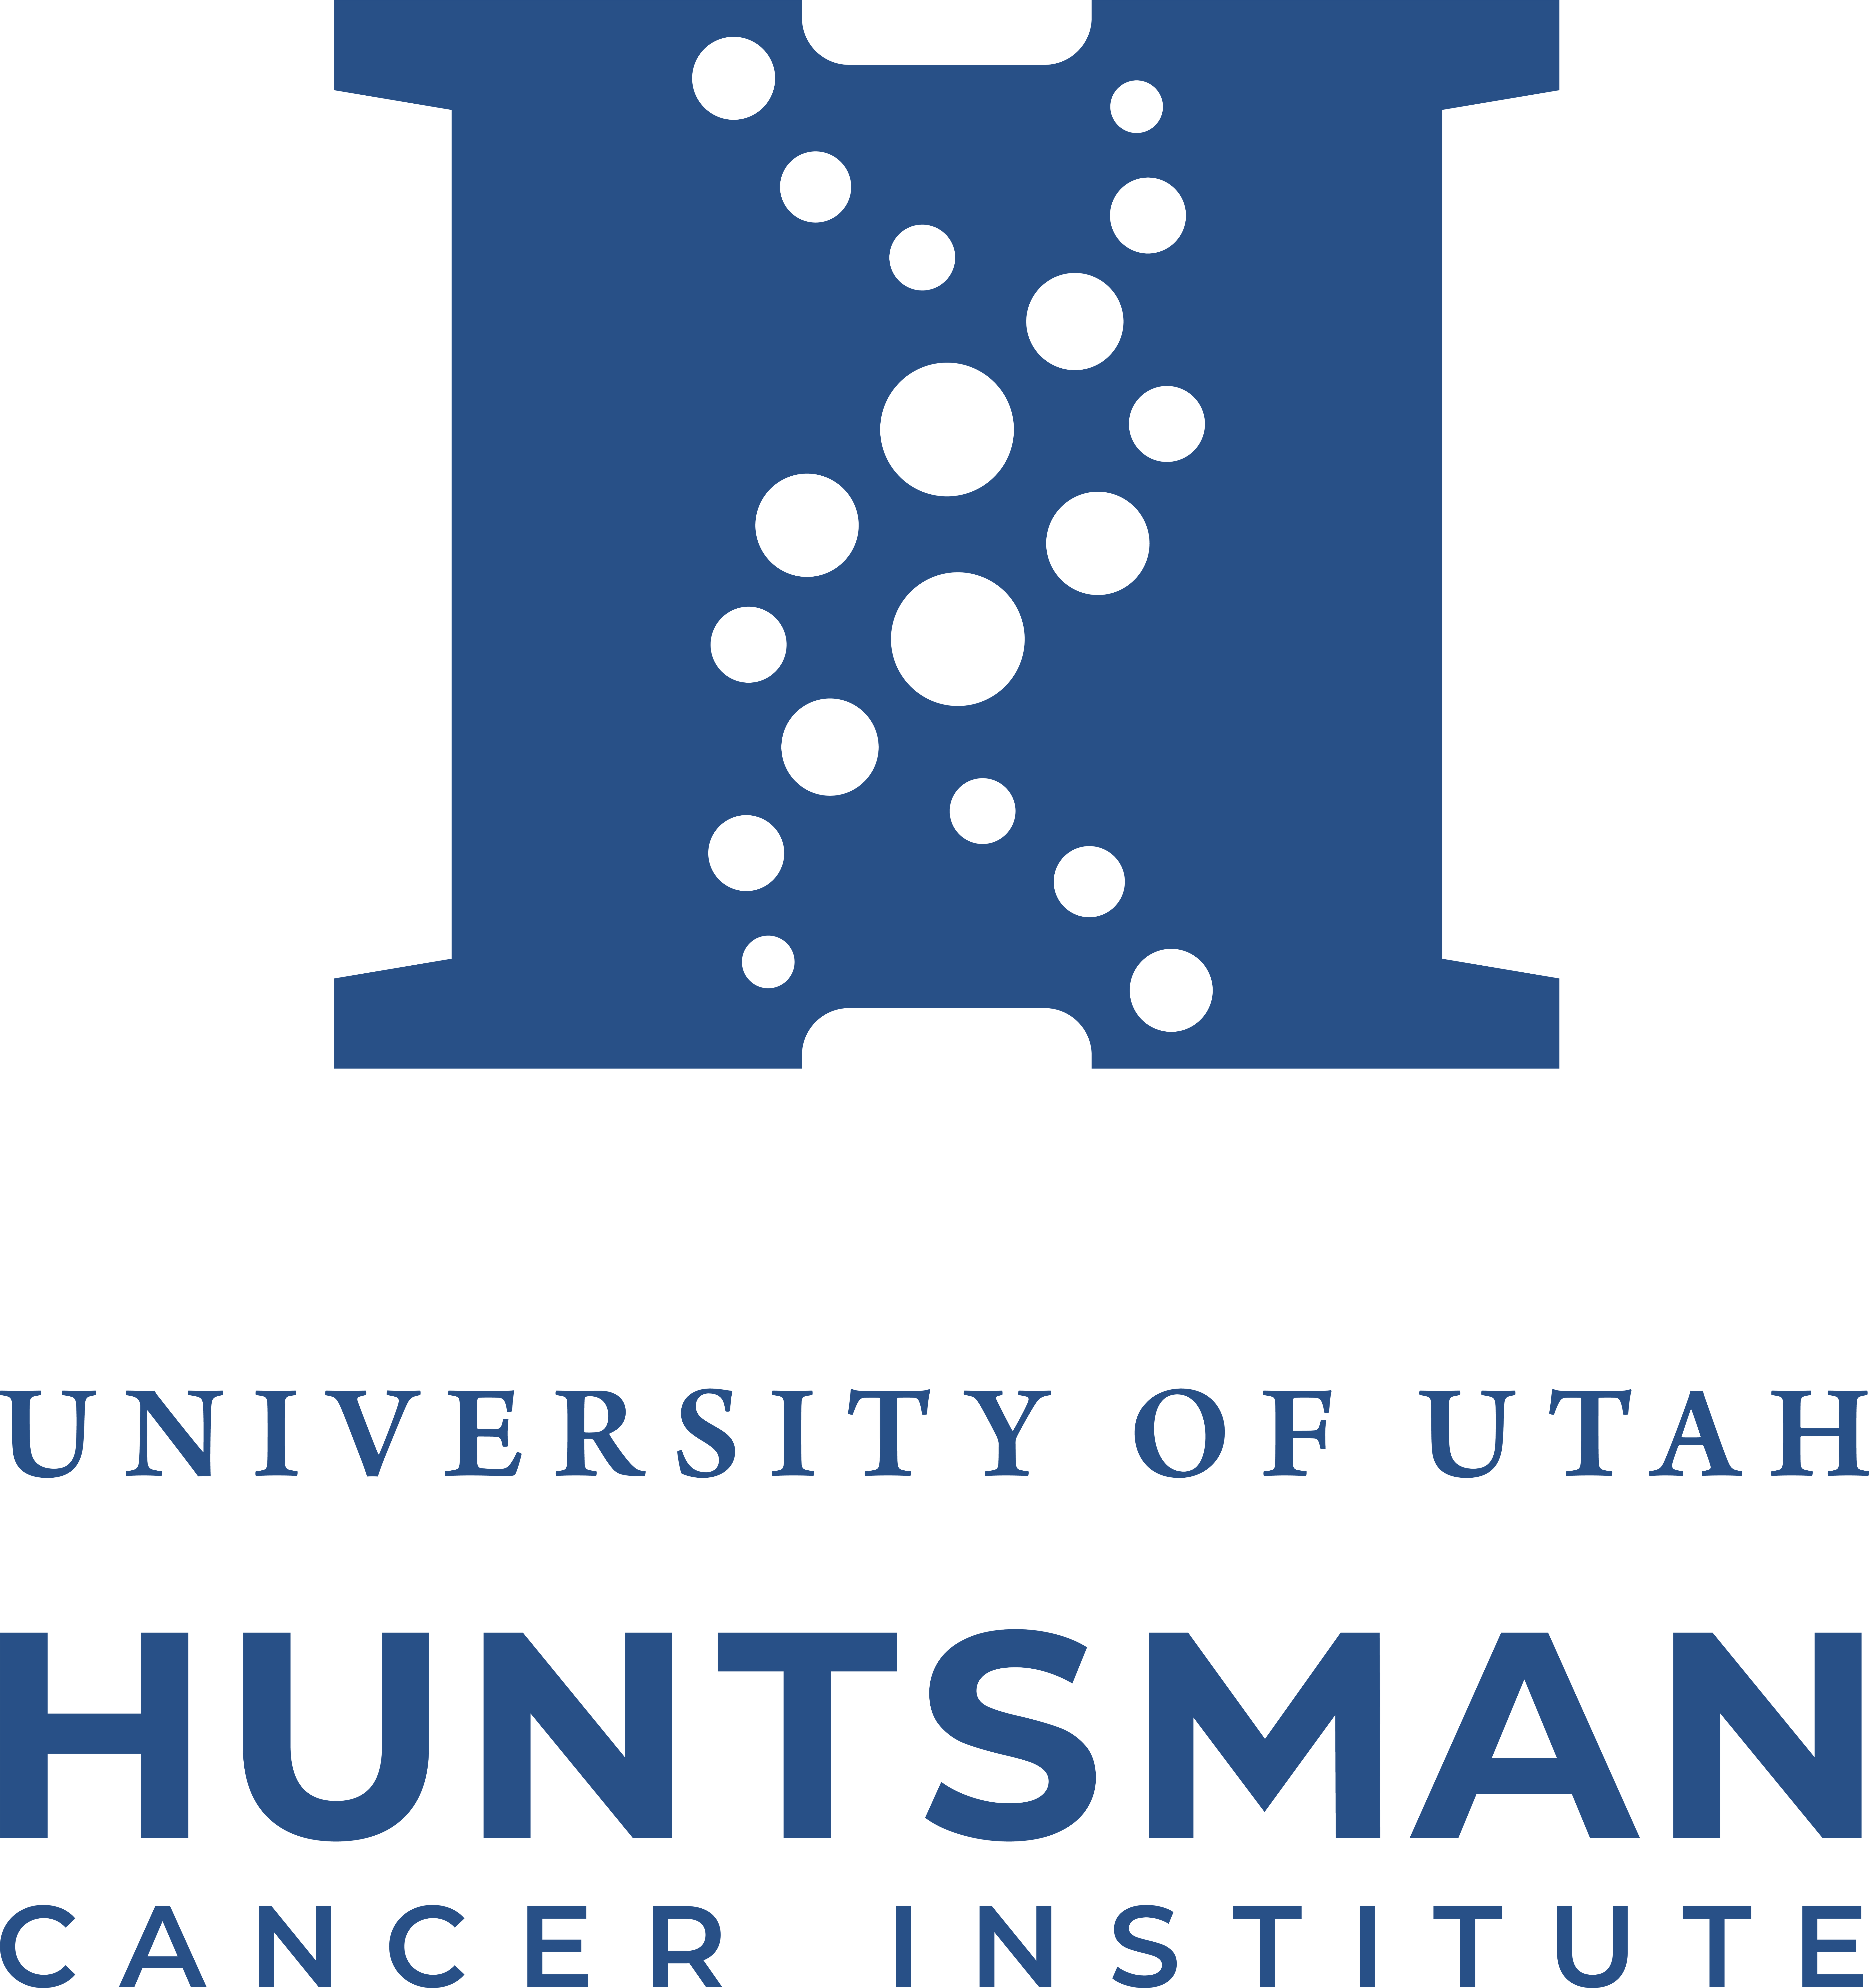 Huntsman Cancer Institute at the University of Utah 